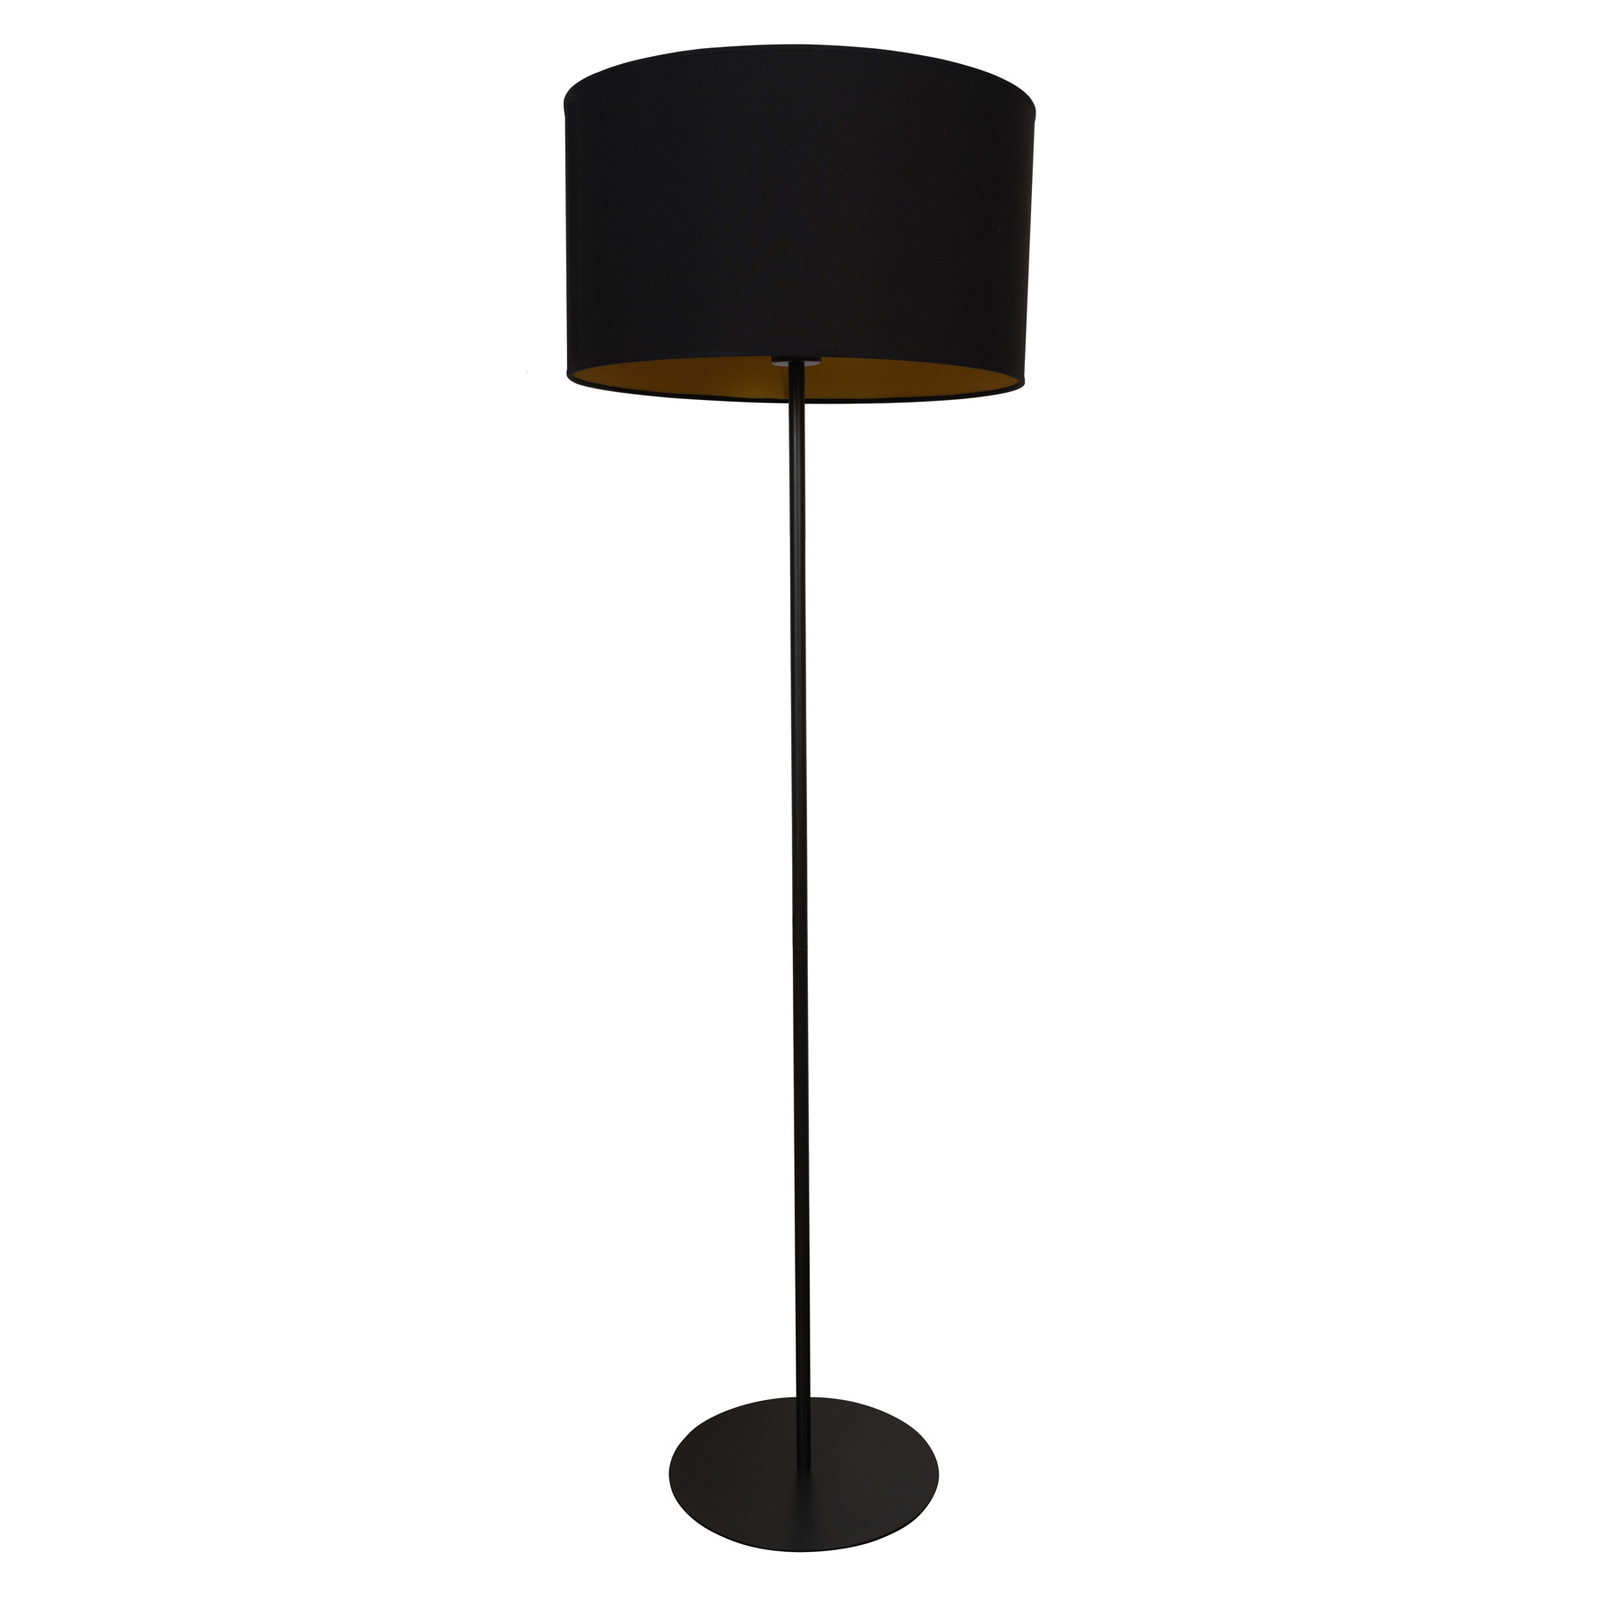 Golvlampa Roller, svart/guld, höjd 145 cm